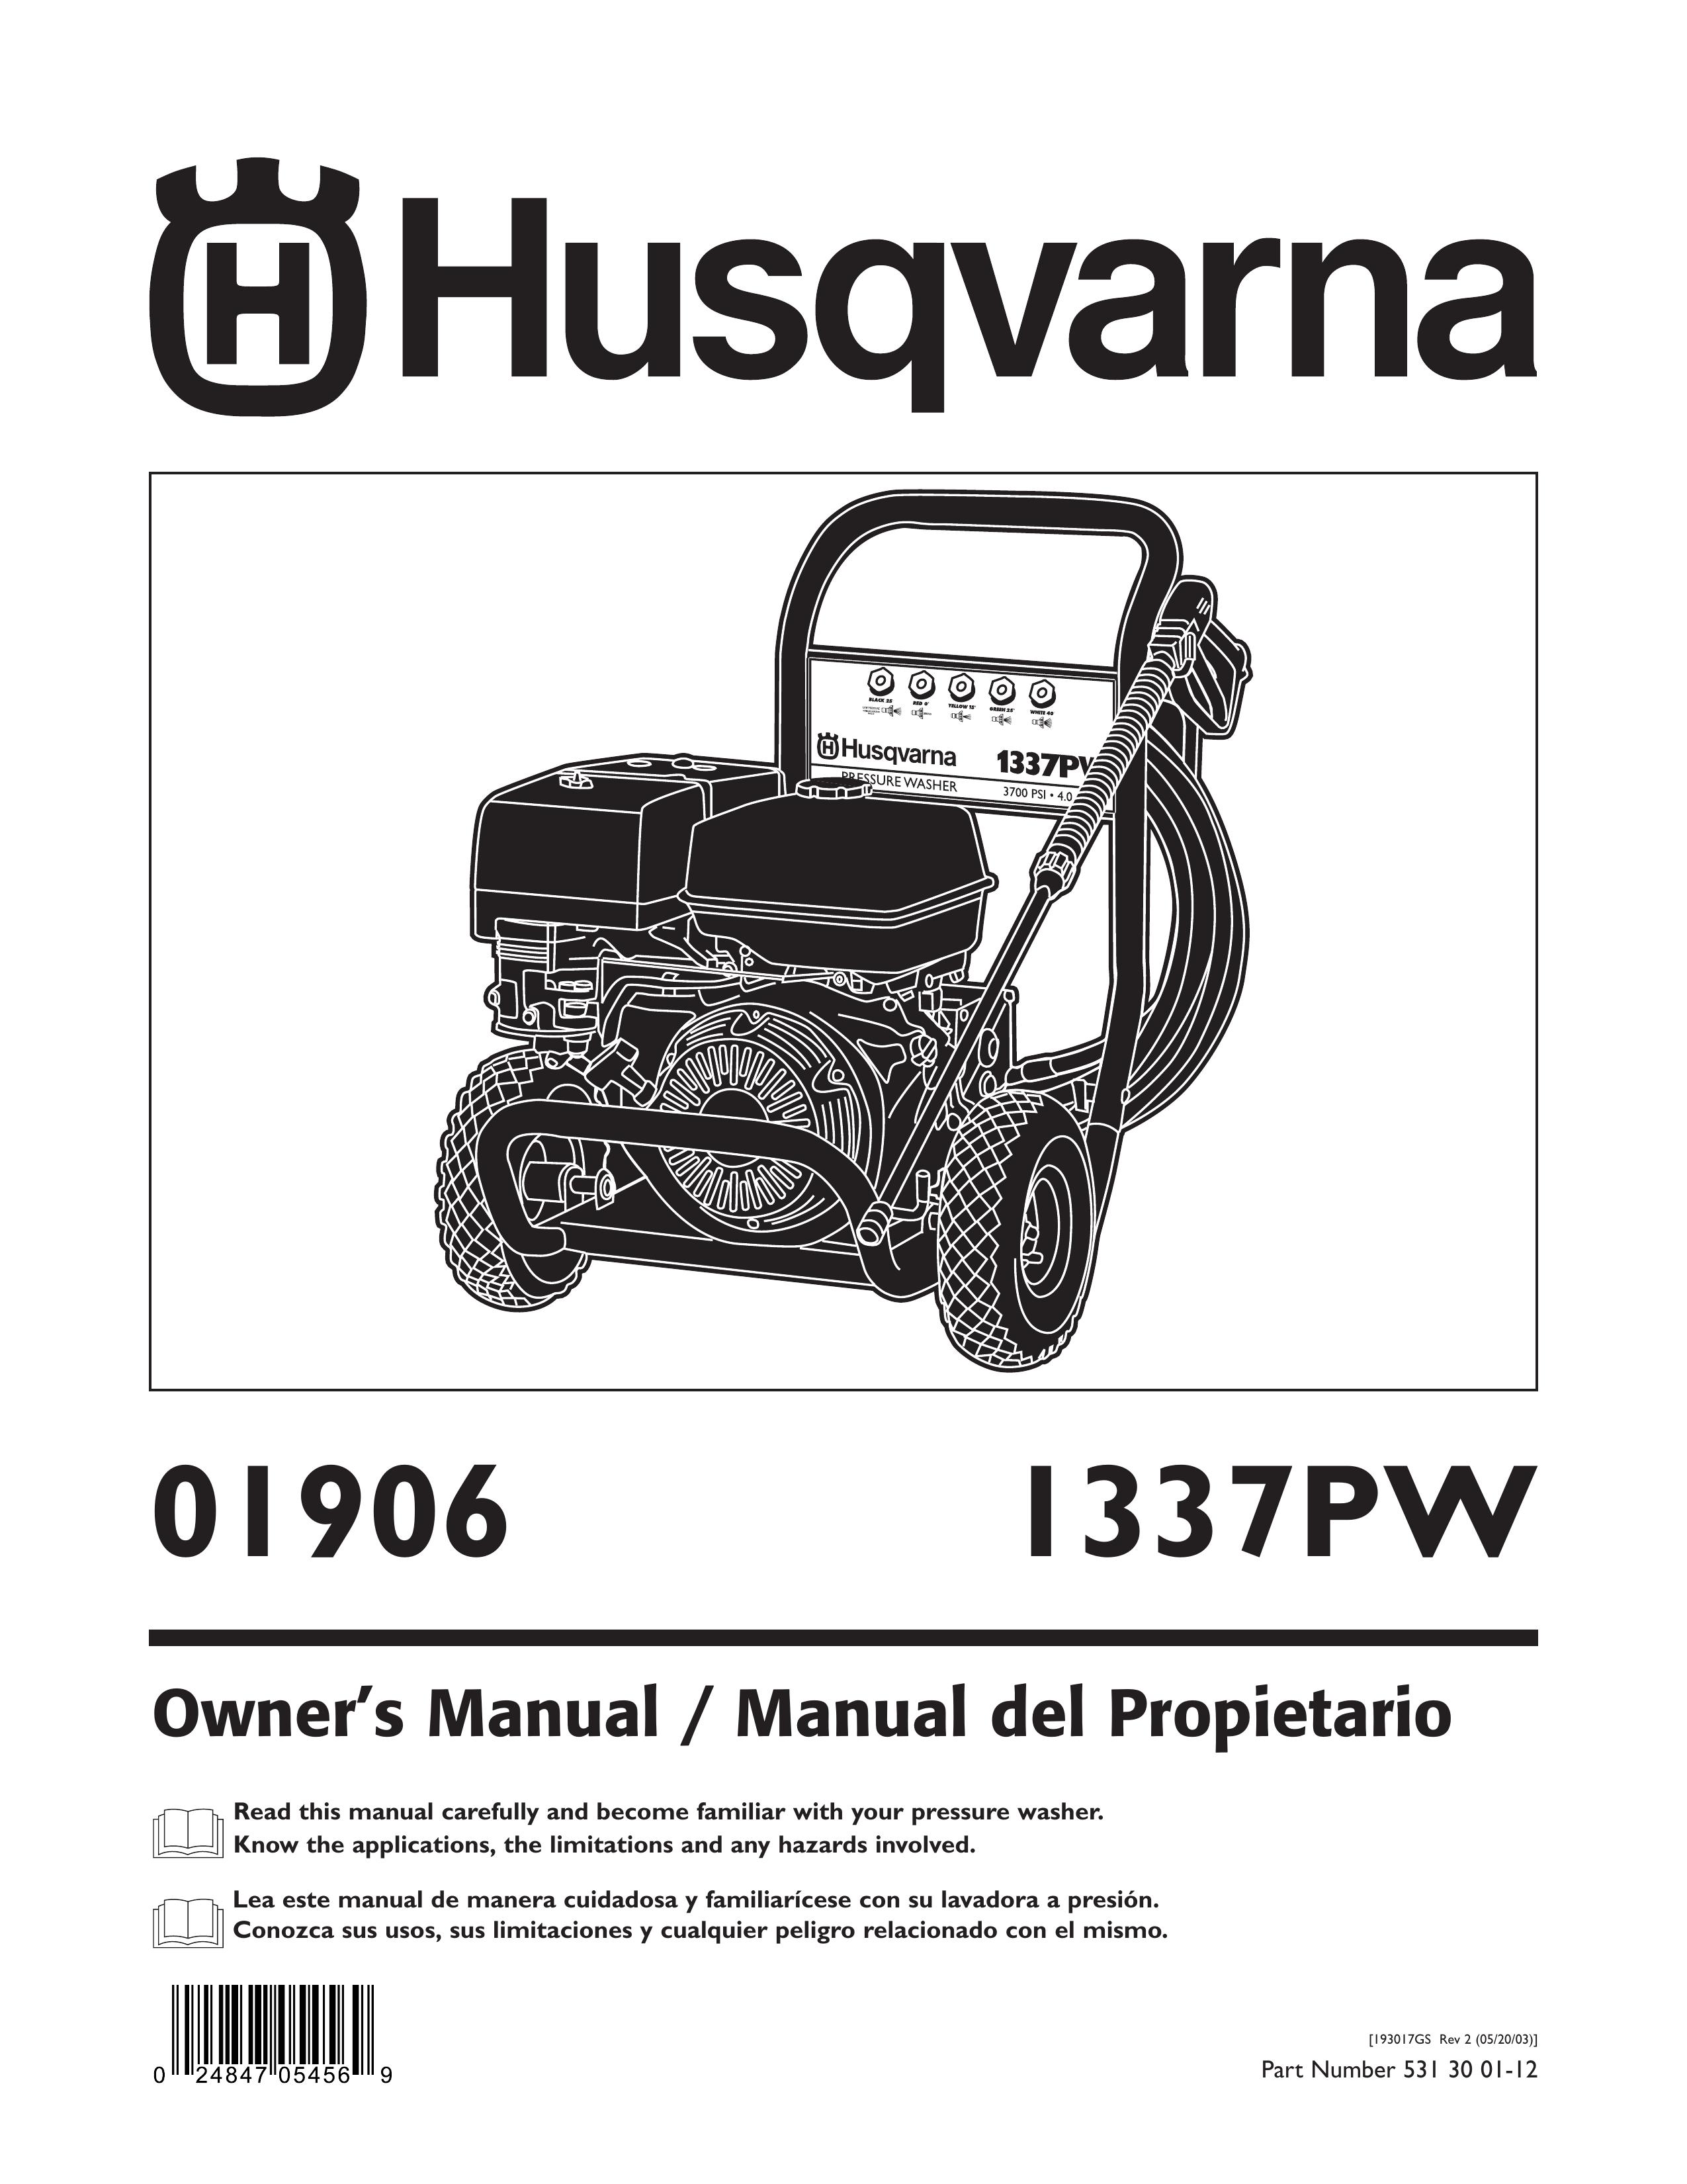 Husqvarna 1337PW Pressure Washer User Manual